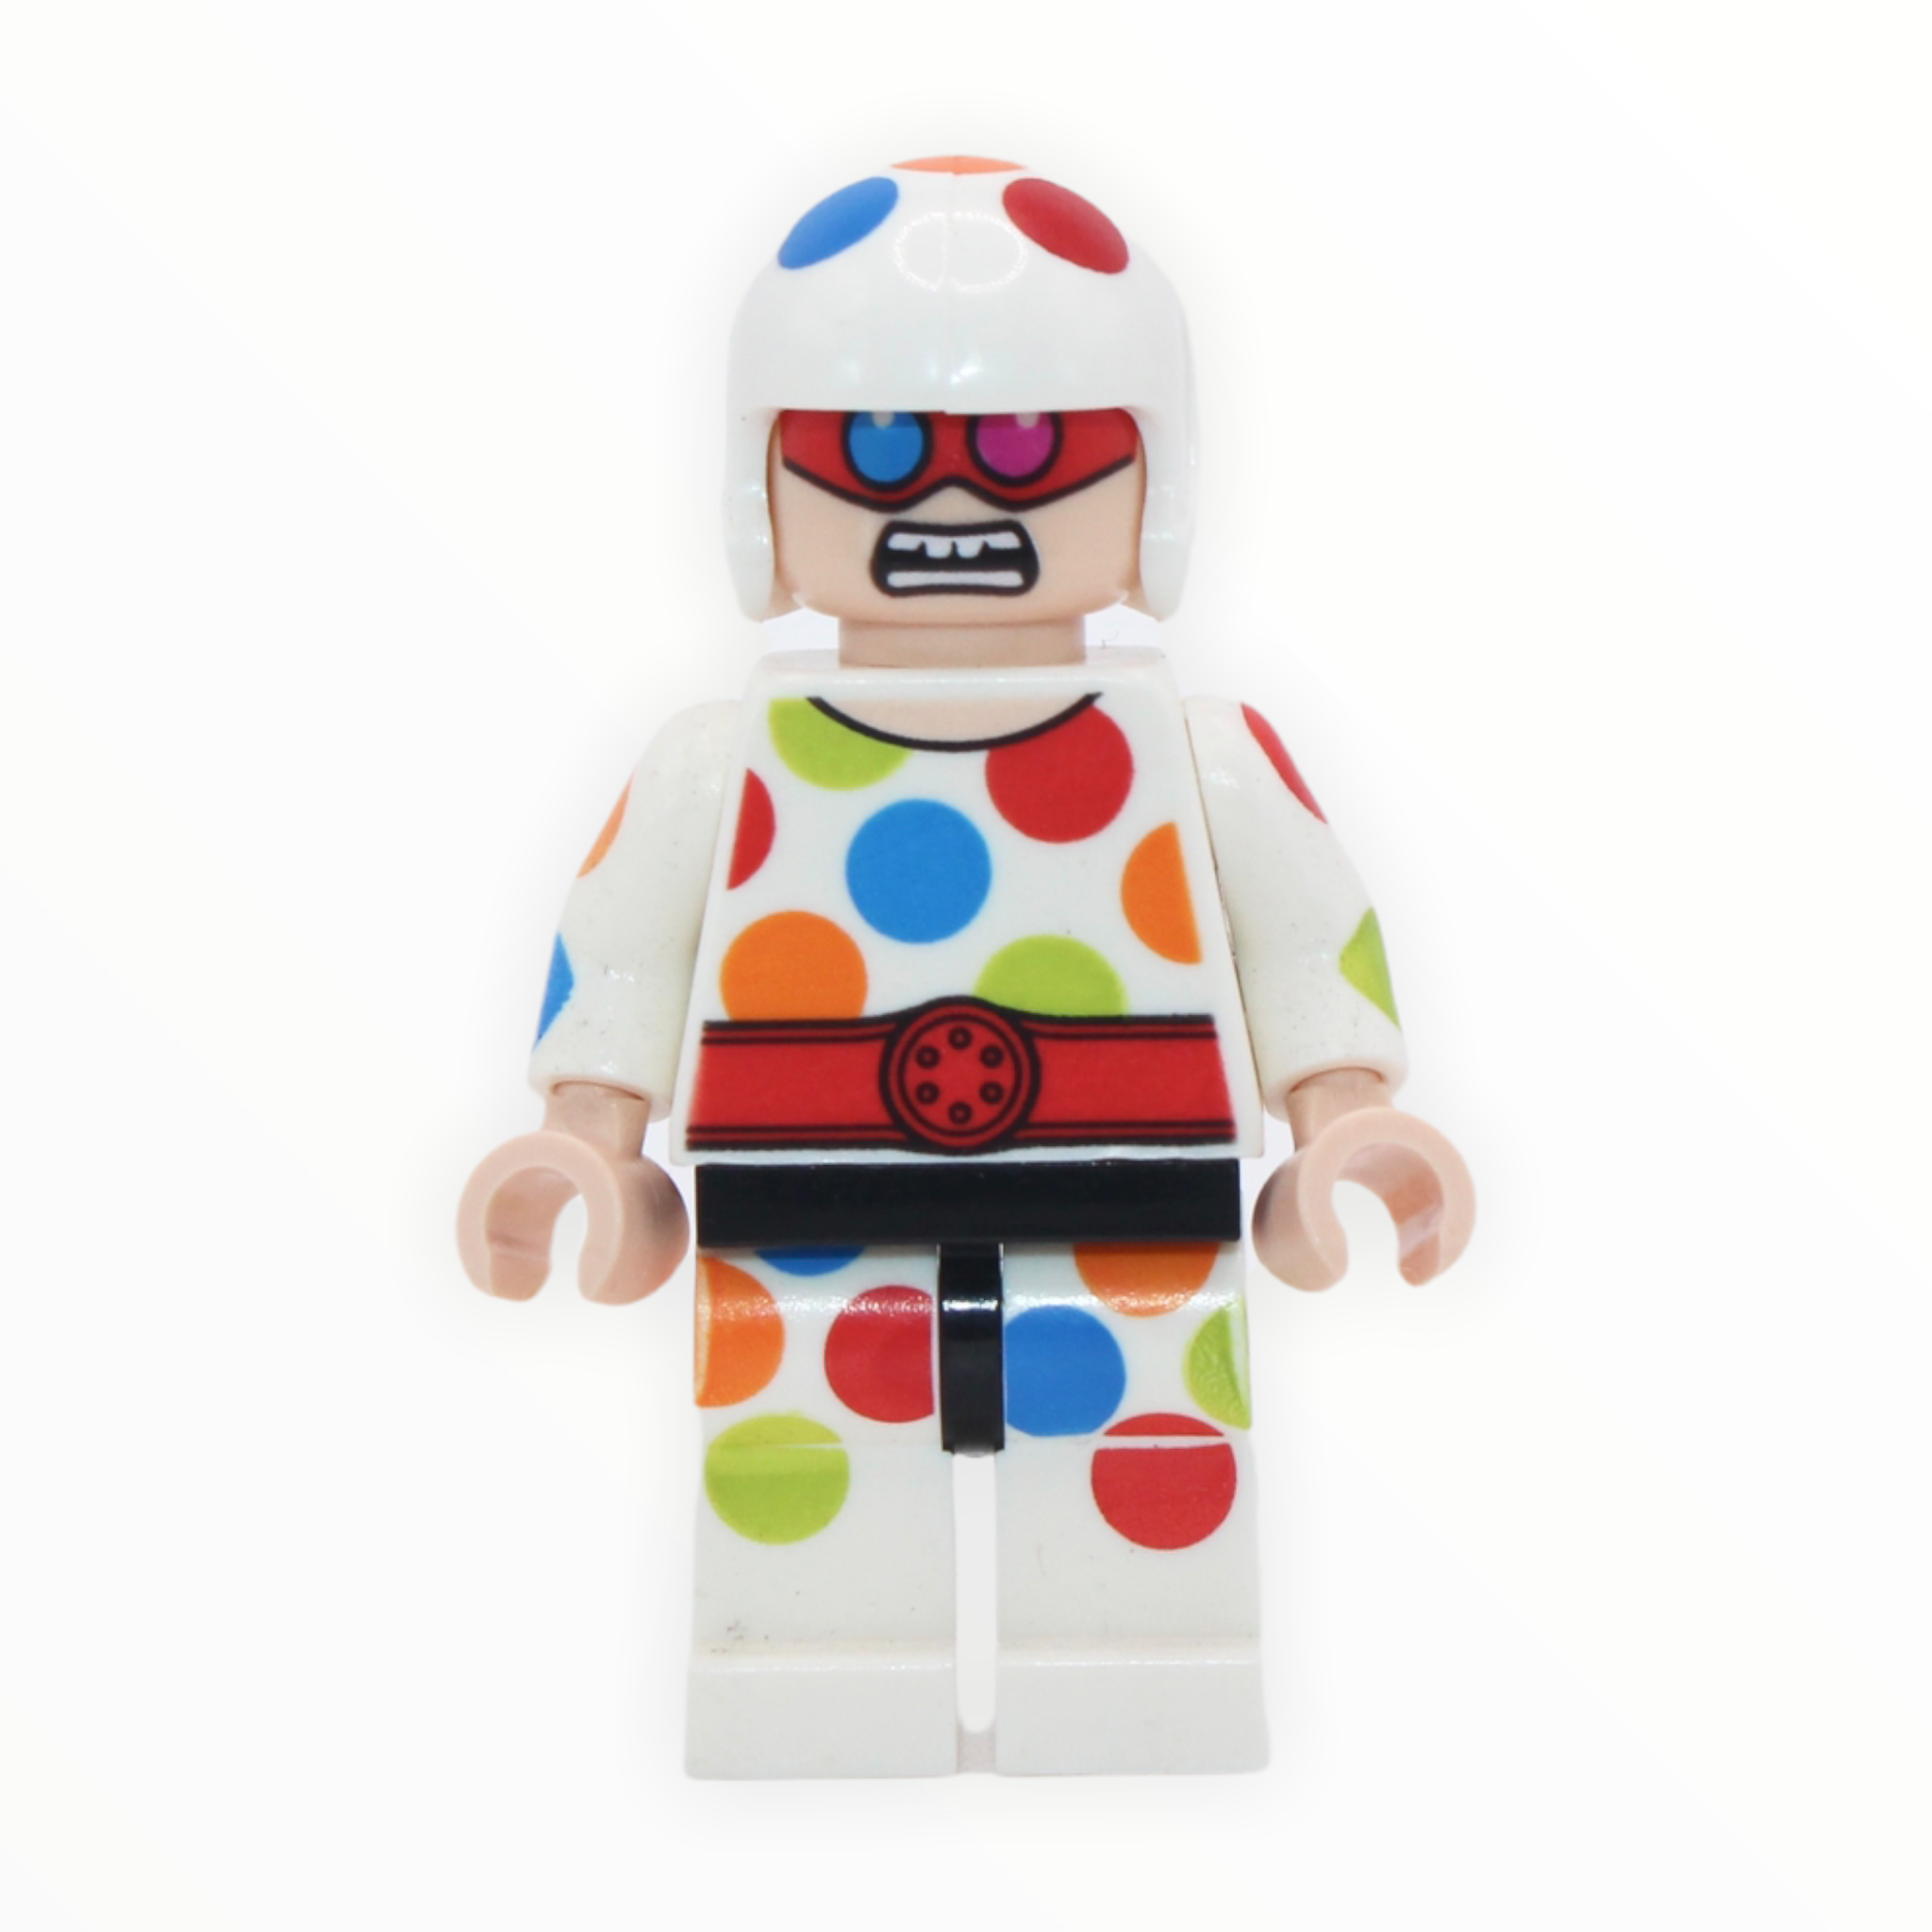 Polka-Dot Man (The LEGO Batman Movie, with polka dot base)